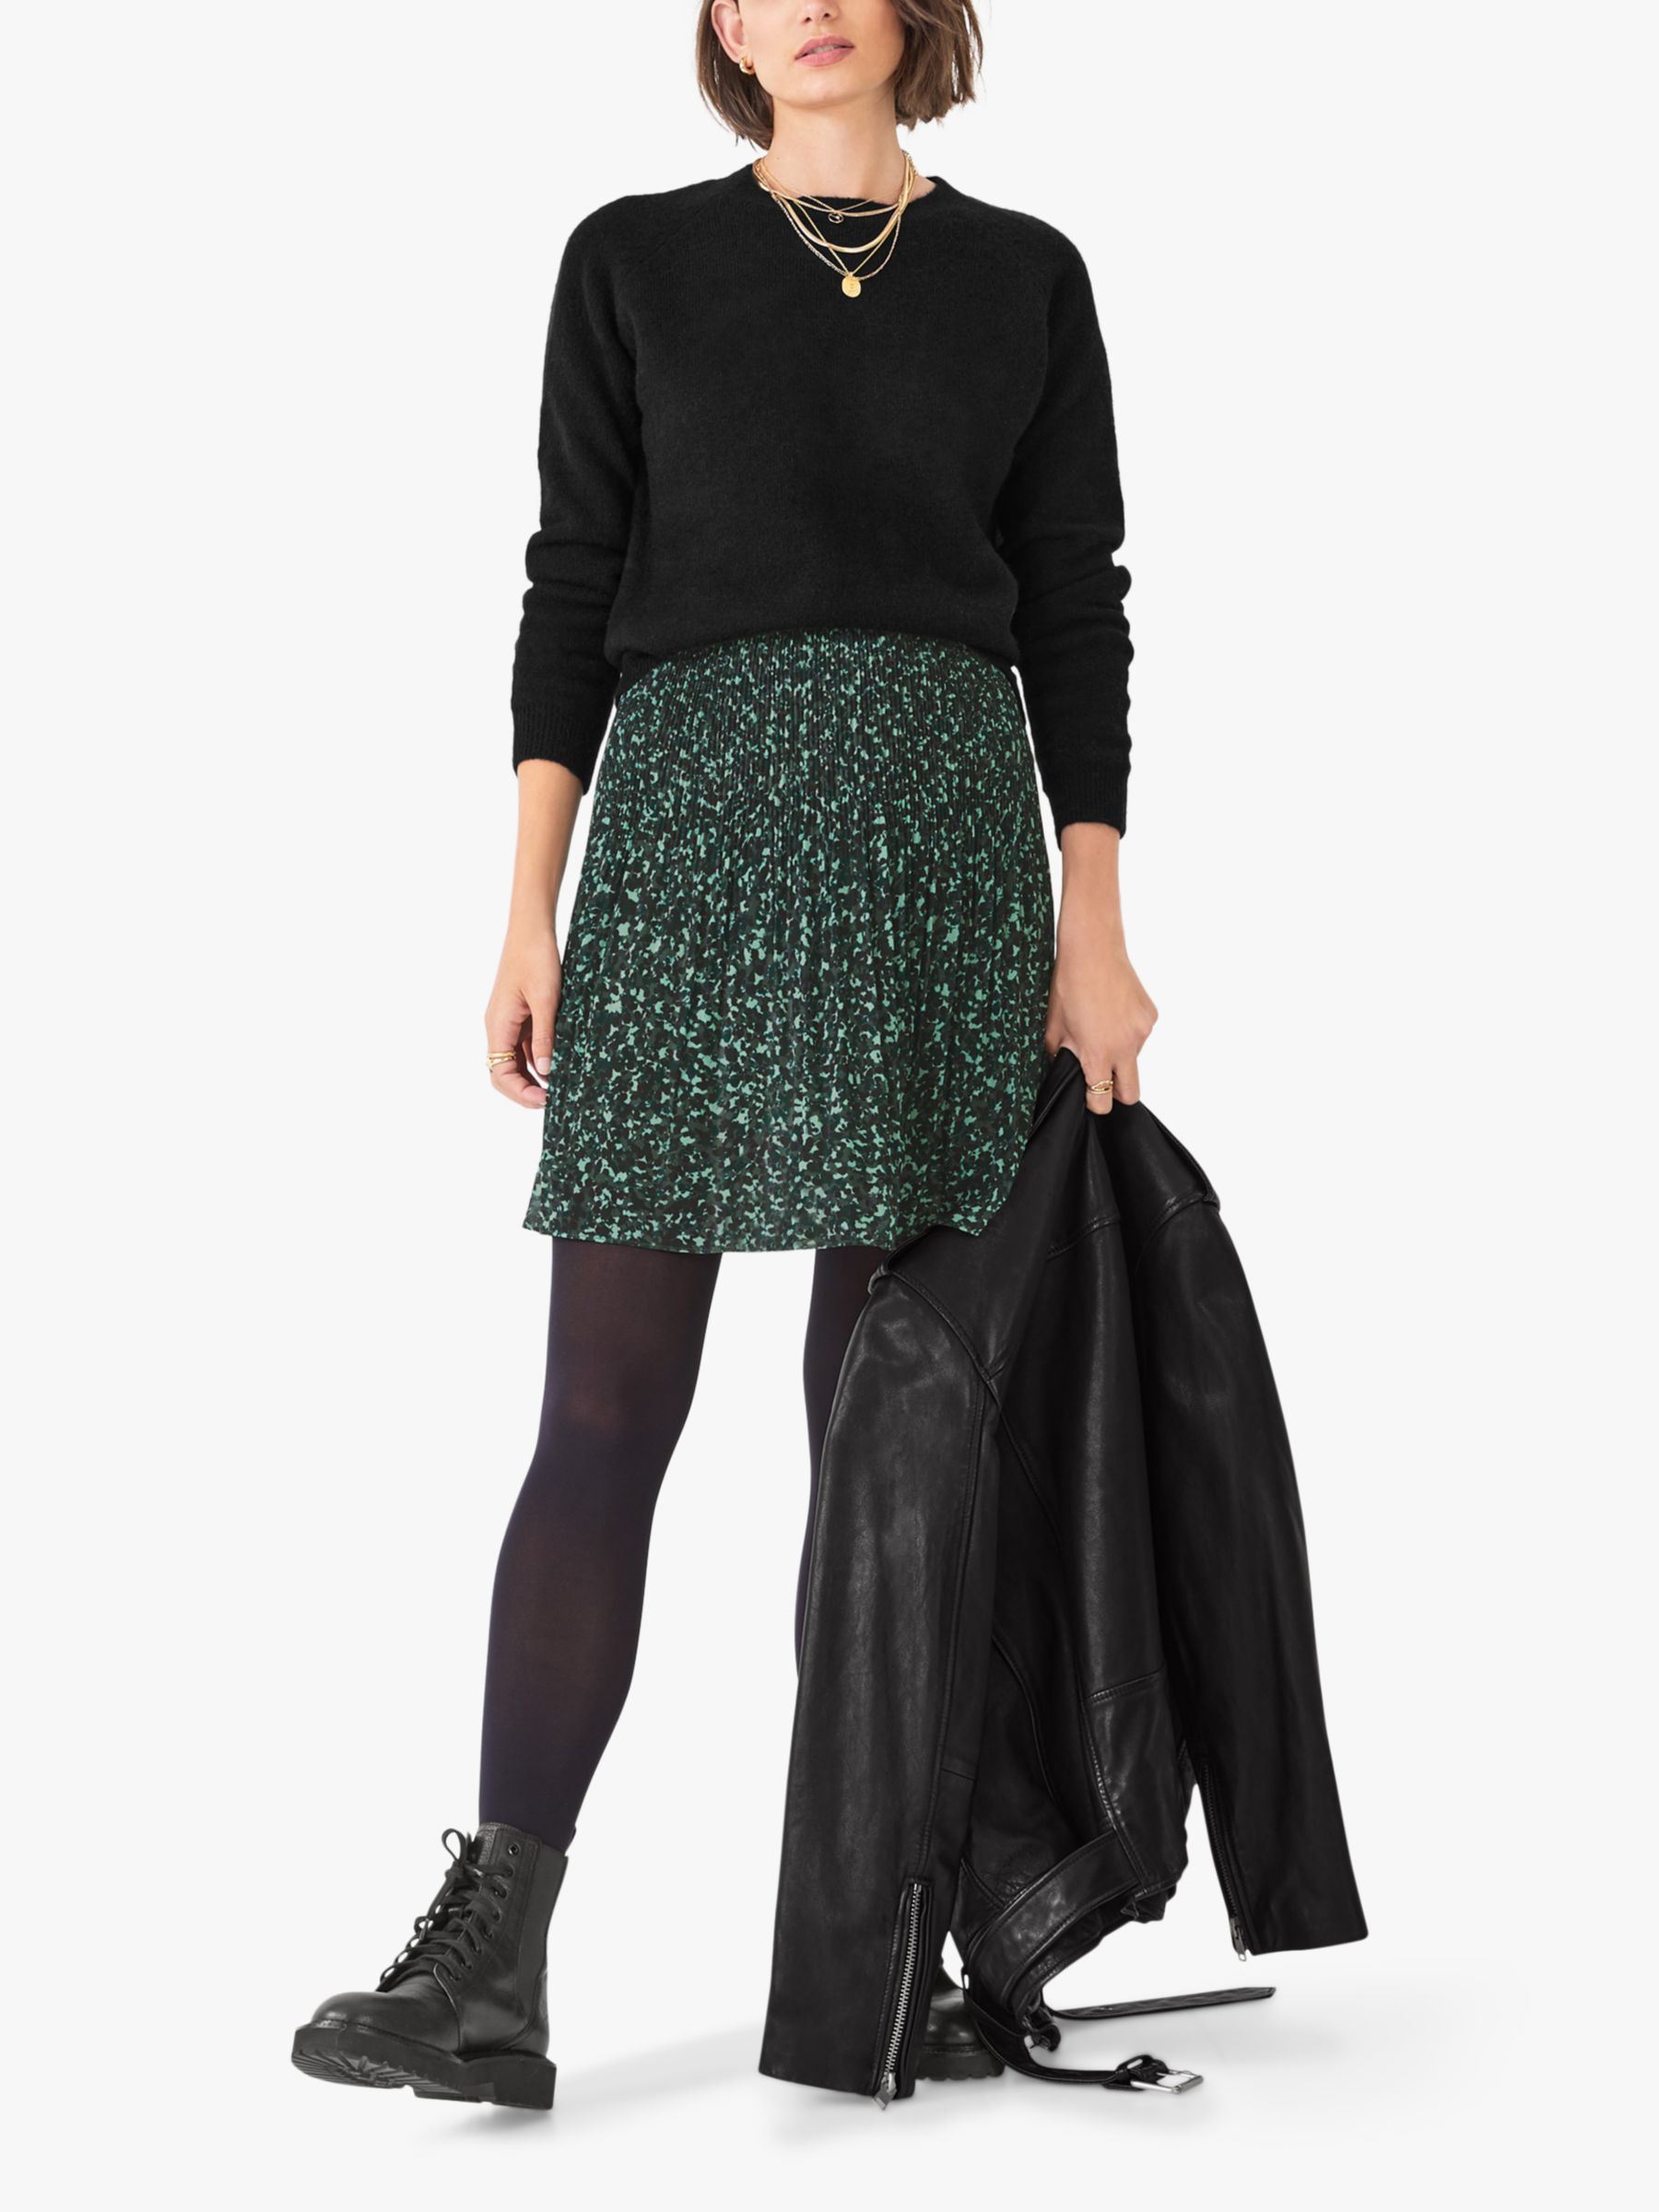 hush Nevah Pleated Mini Skirt, Khaki/Tortoiseshell, 6